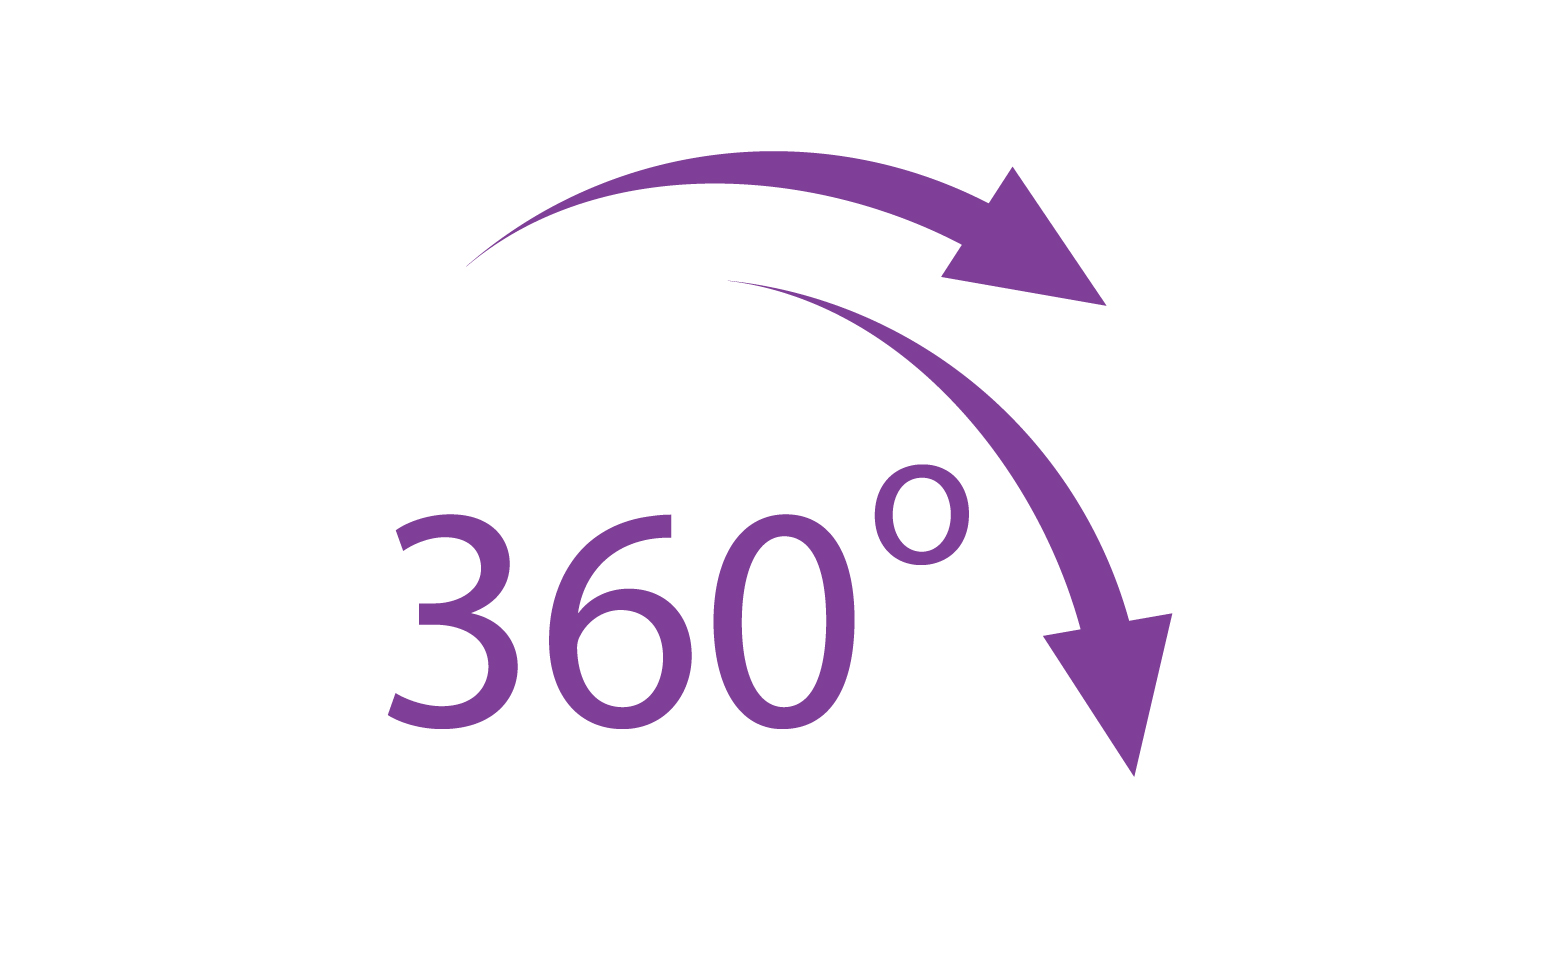 360 degree angle rotation icon symbol logo version v46